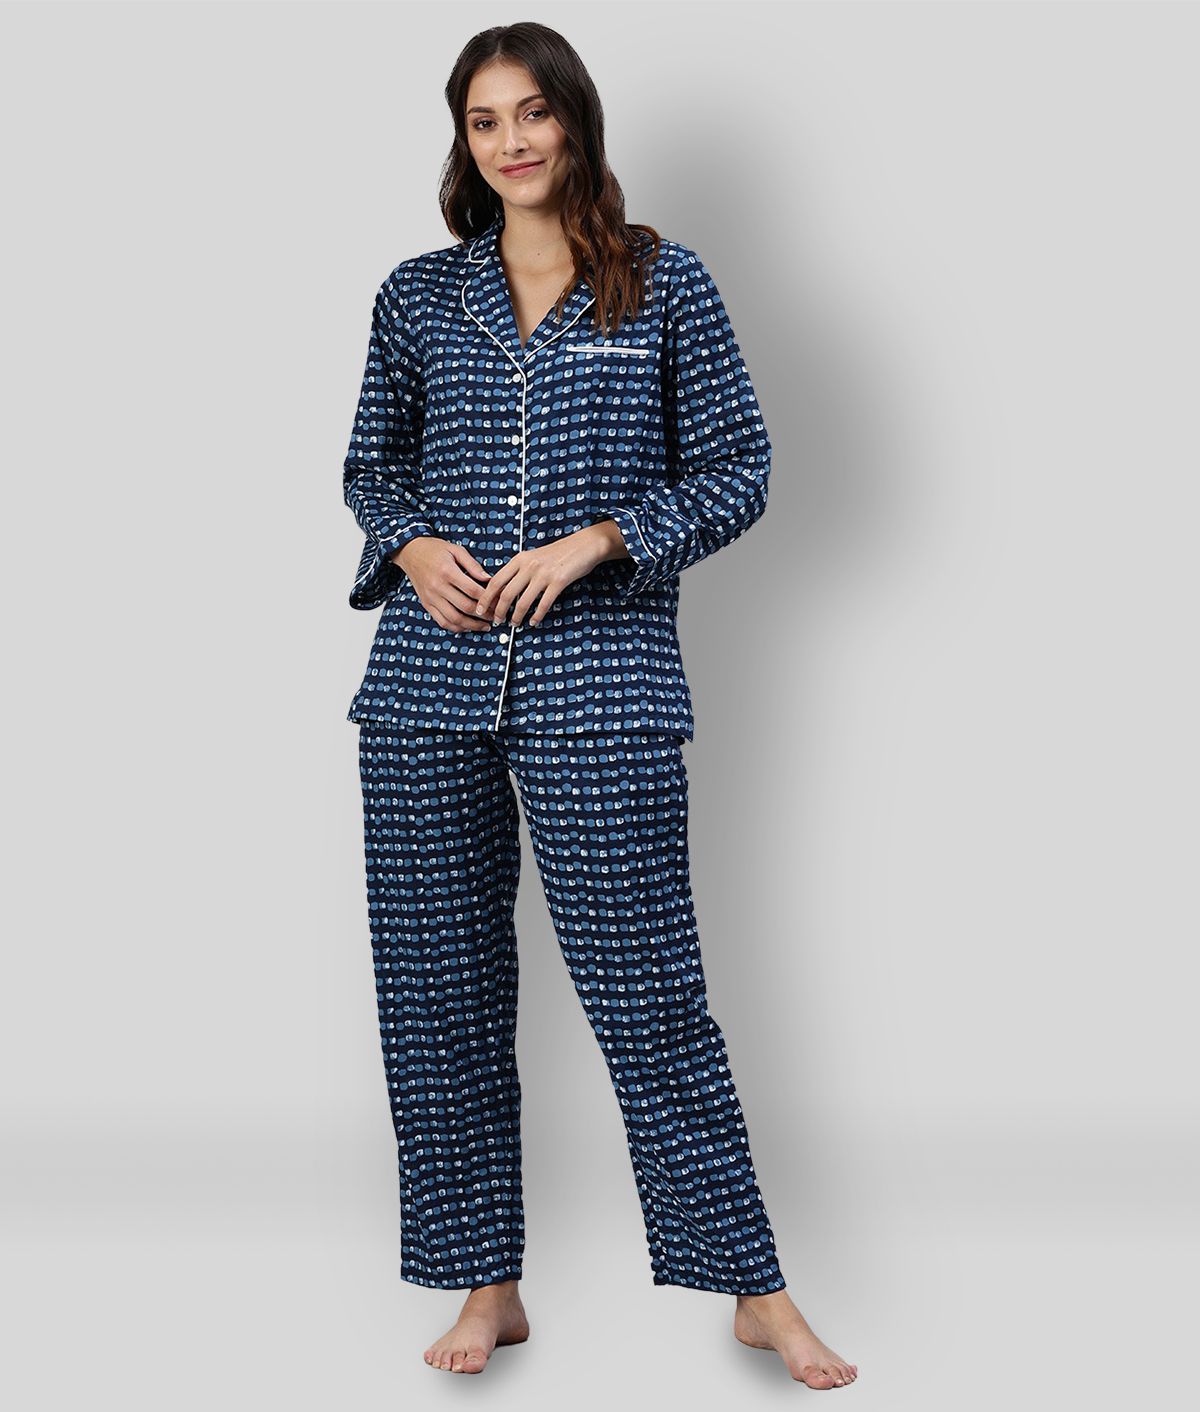     			Divena - Blue Cotton Women's Nightwear Nightsuit Sets